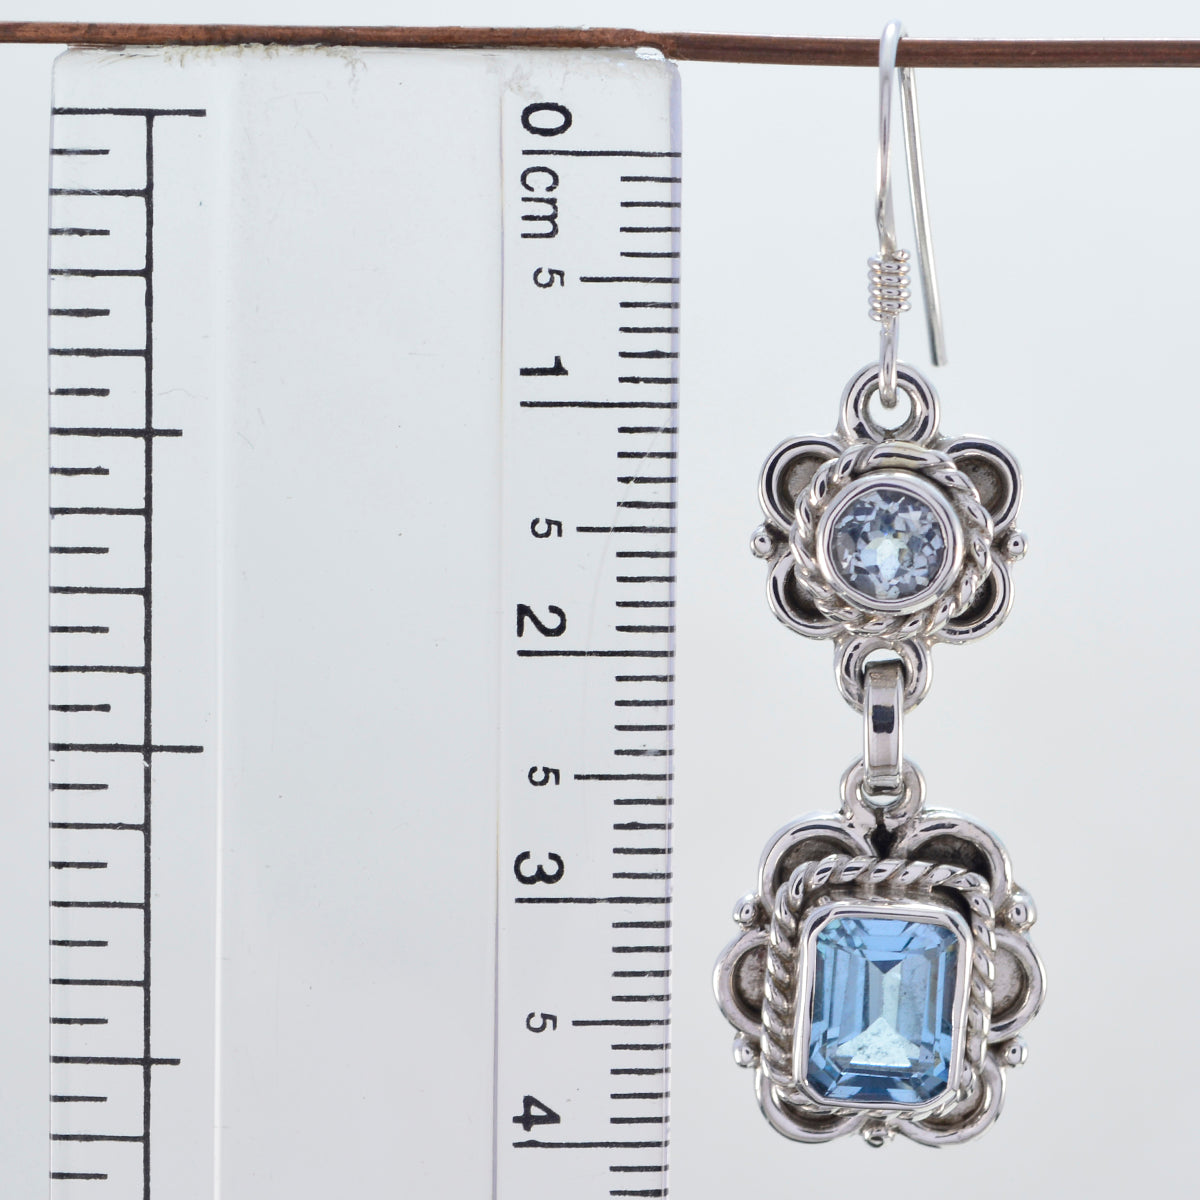 Riyo Genuine Gems multi shape Faceted Blue Topaz Silver Earring gift for girlfriend